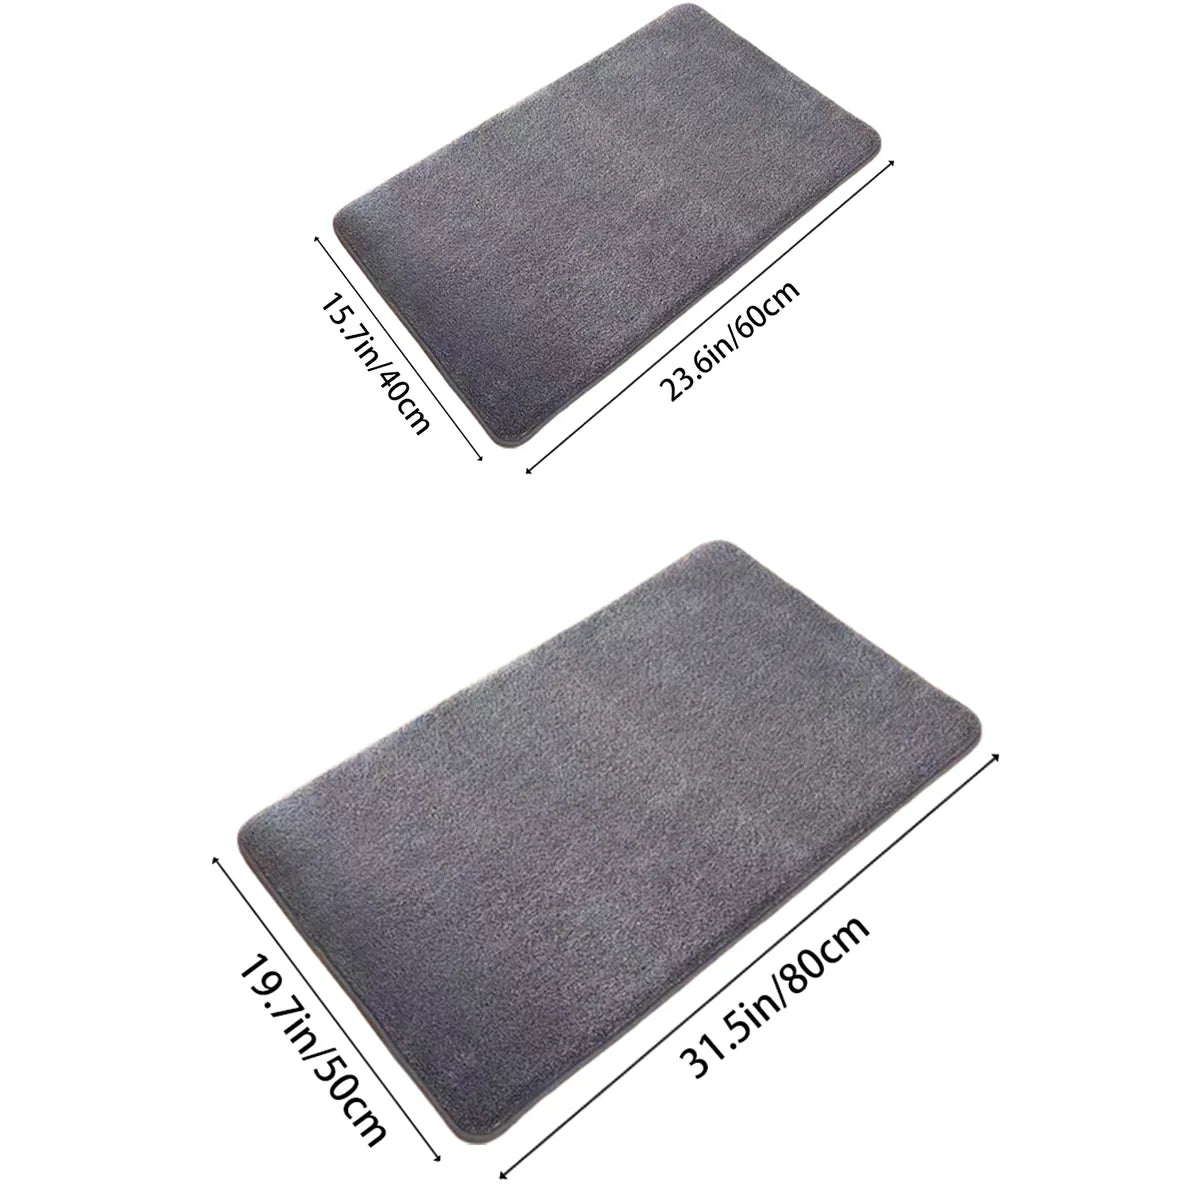 Super absorbent floor mat, super absorbent bath mat, super anti slip coral velvet bathroom floor mat, door mat